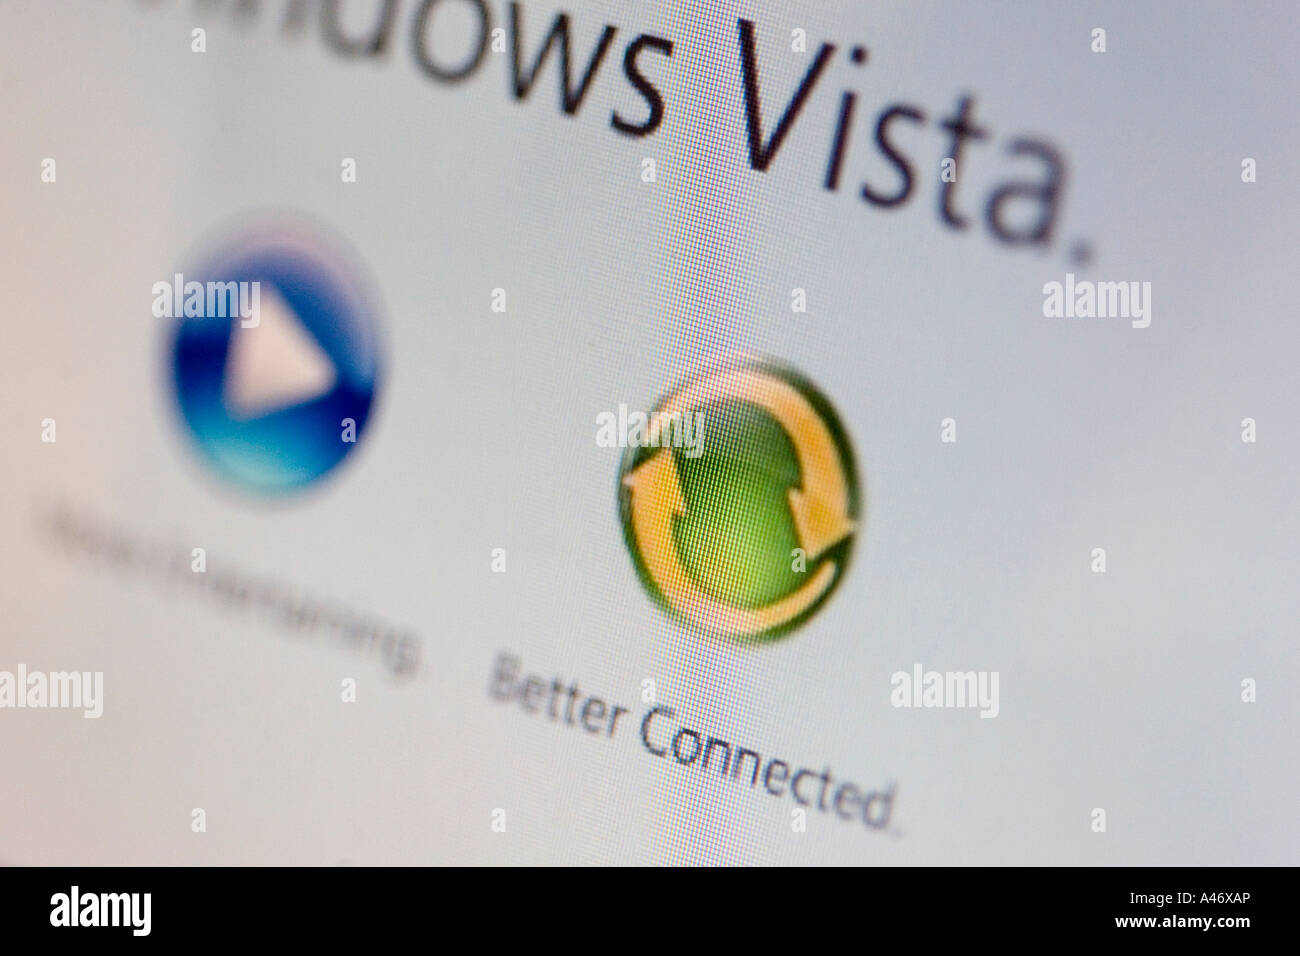 Microsoft Windows Vista - connectivity Stock Photo